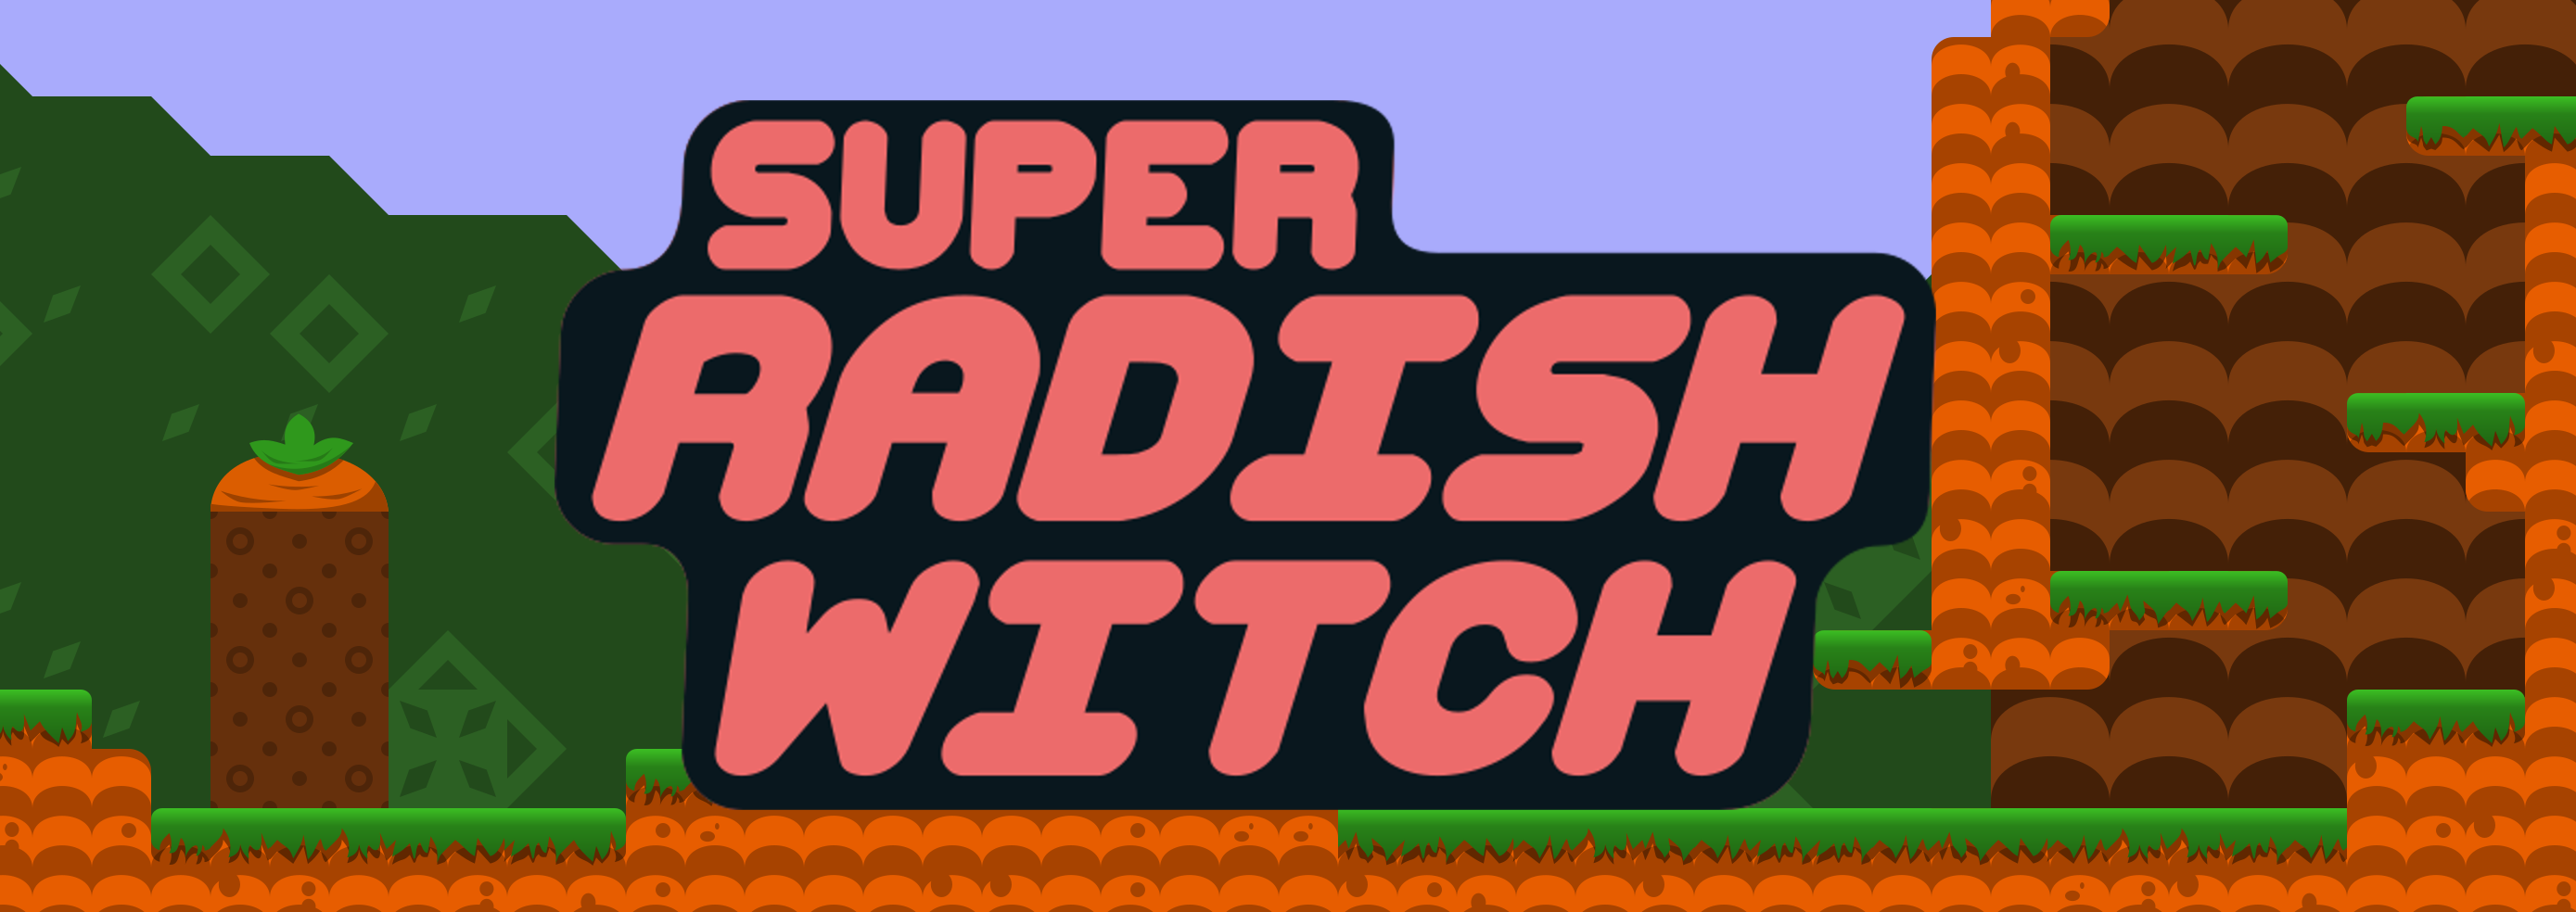 Super Radish Witch